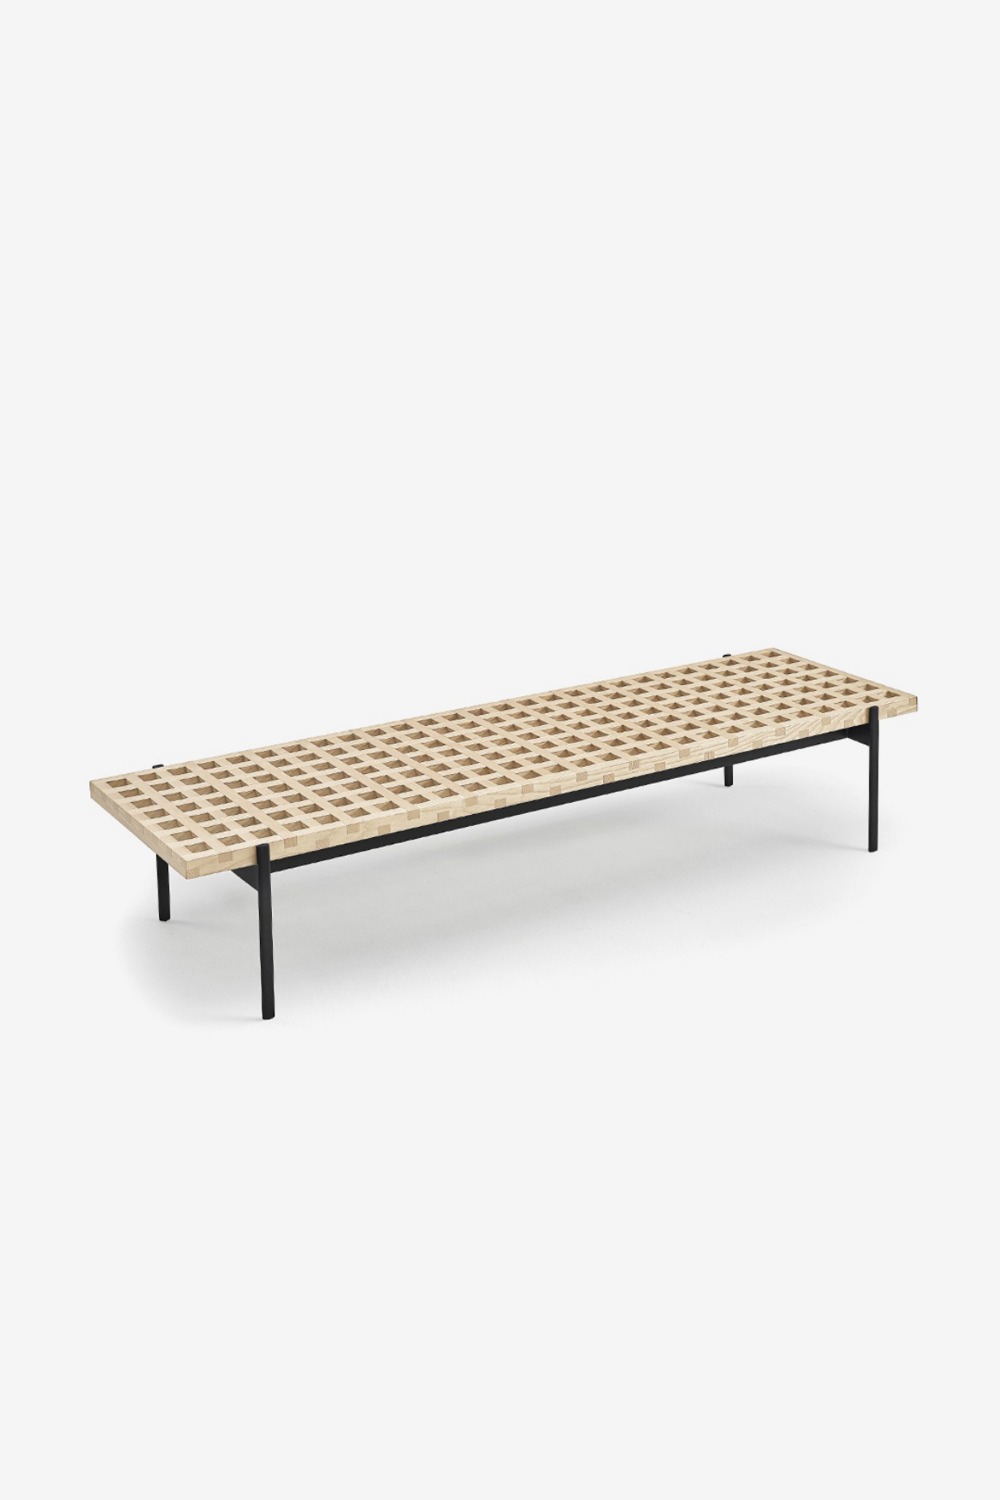 [SANCAL] INTERCHANGE bench table / L